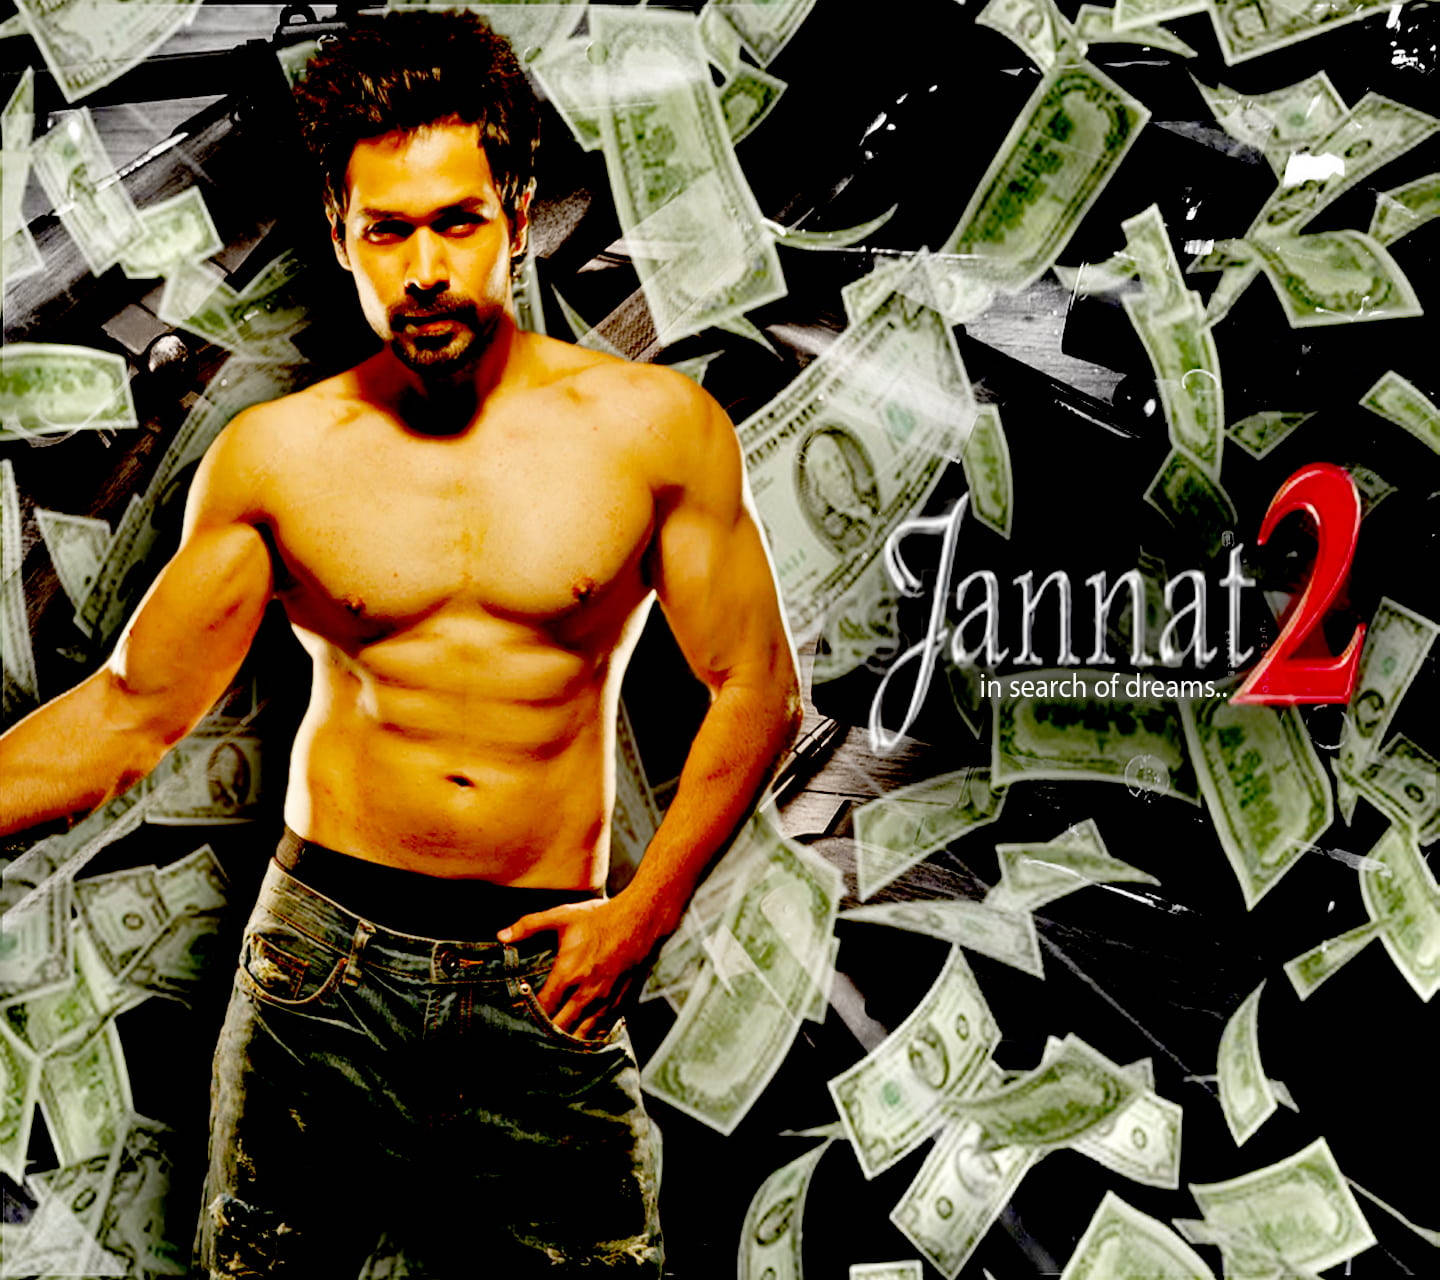 Imranhashmi Jannat 2 Money → Imran Hashmi Jannat 2 Pengar (as A Possible Wallpaper Caption) Wallpaper